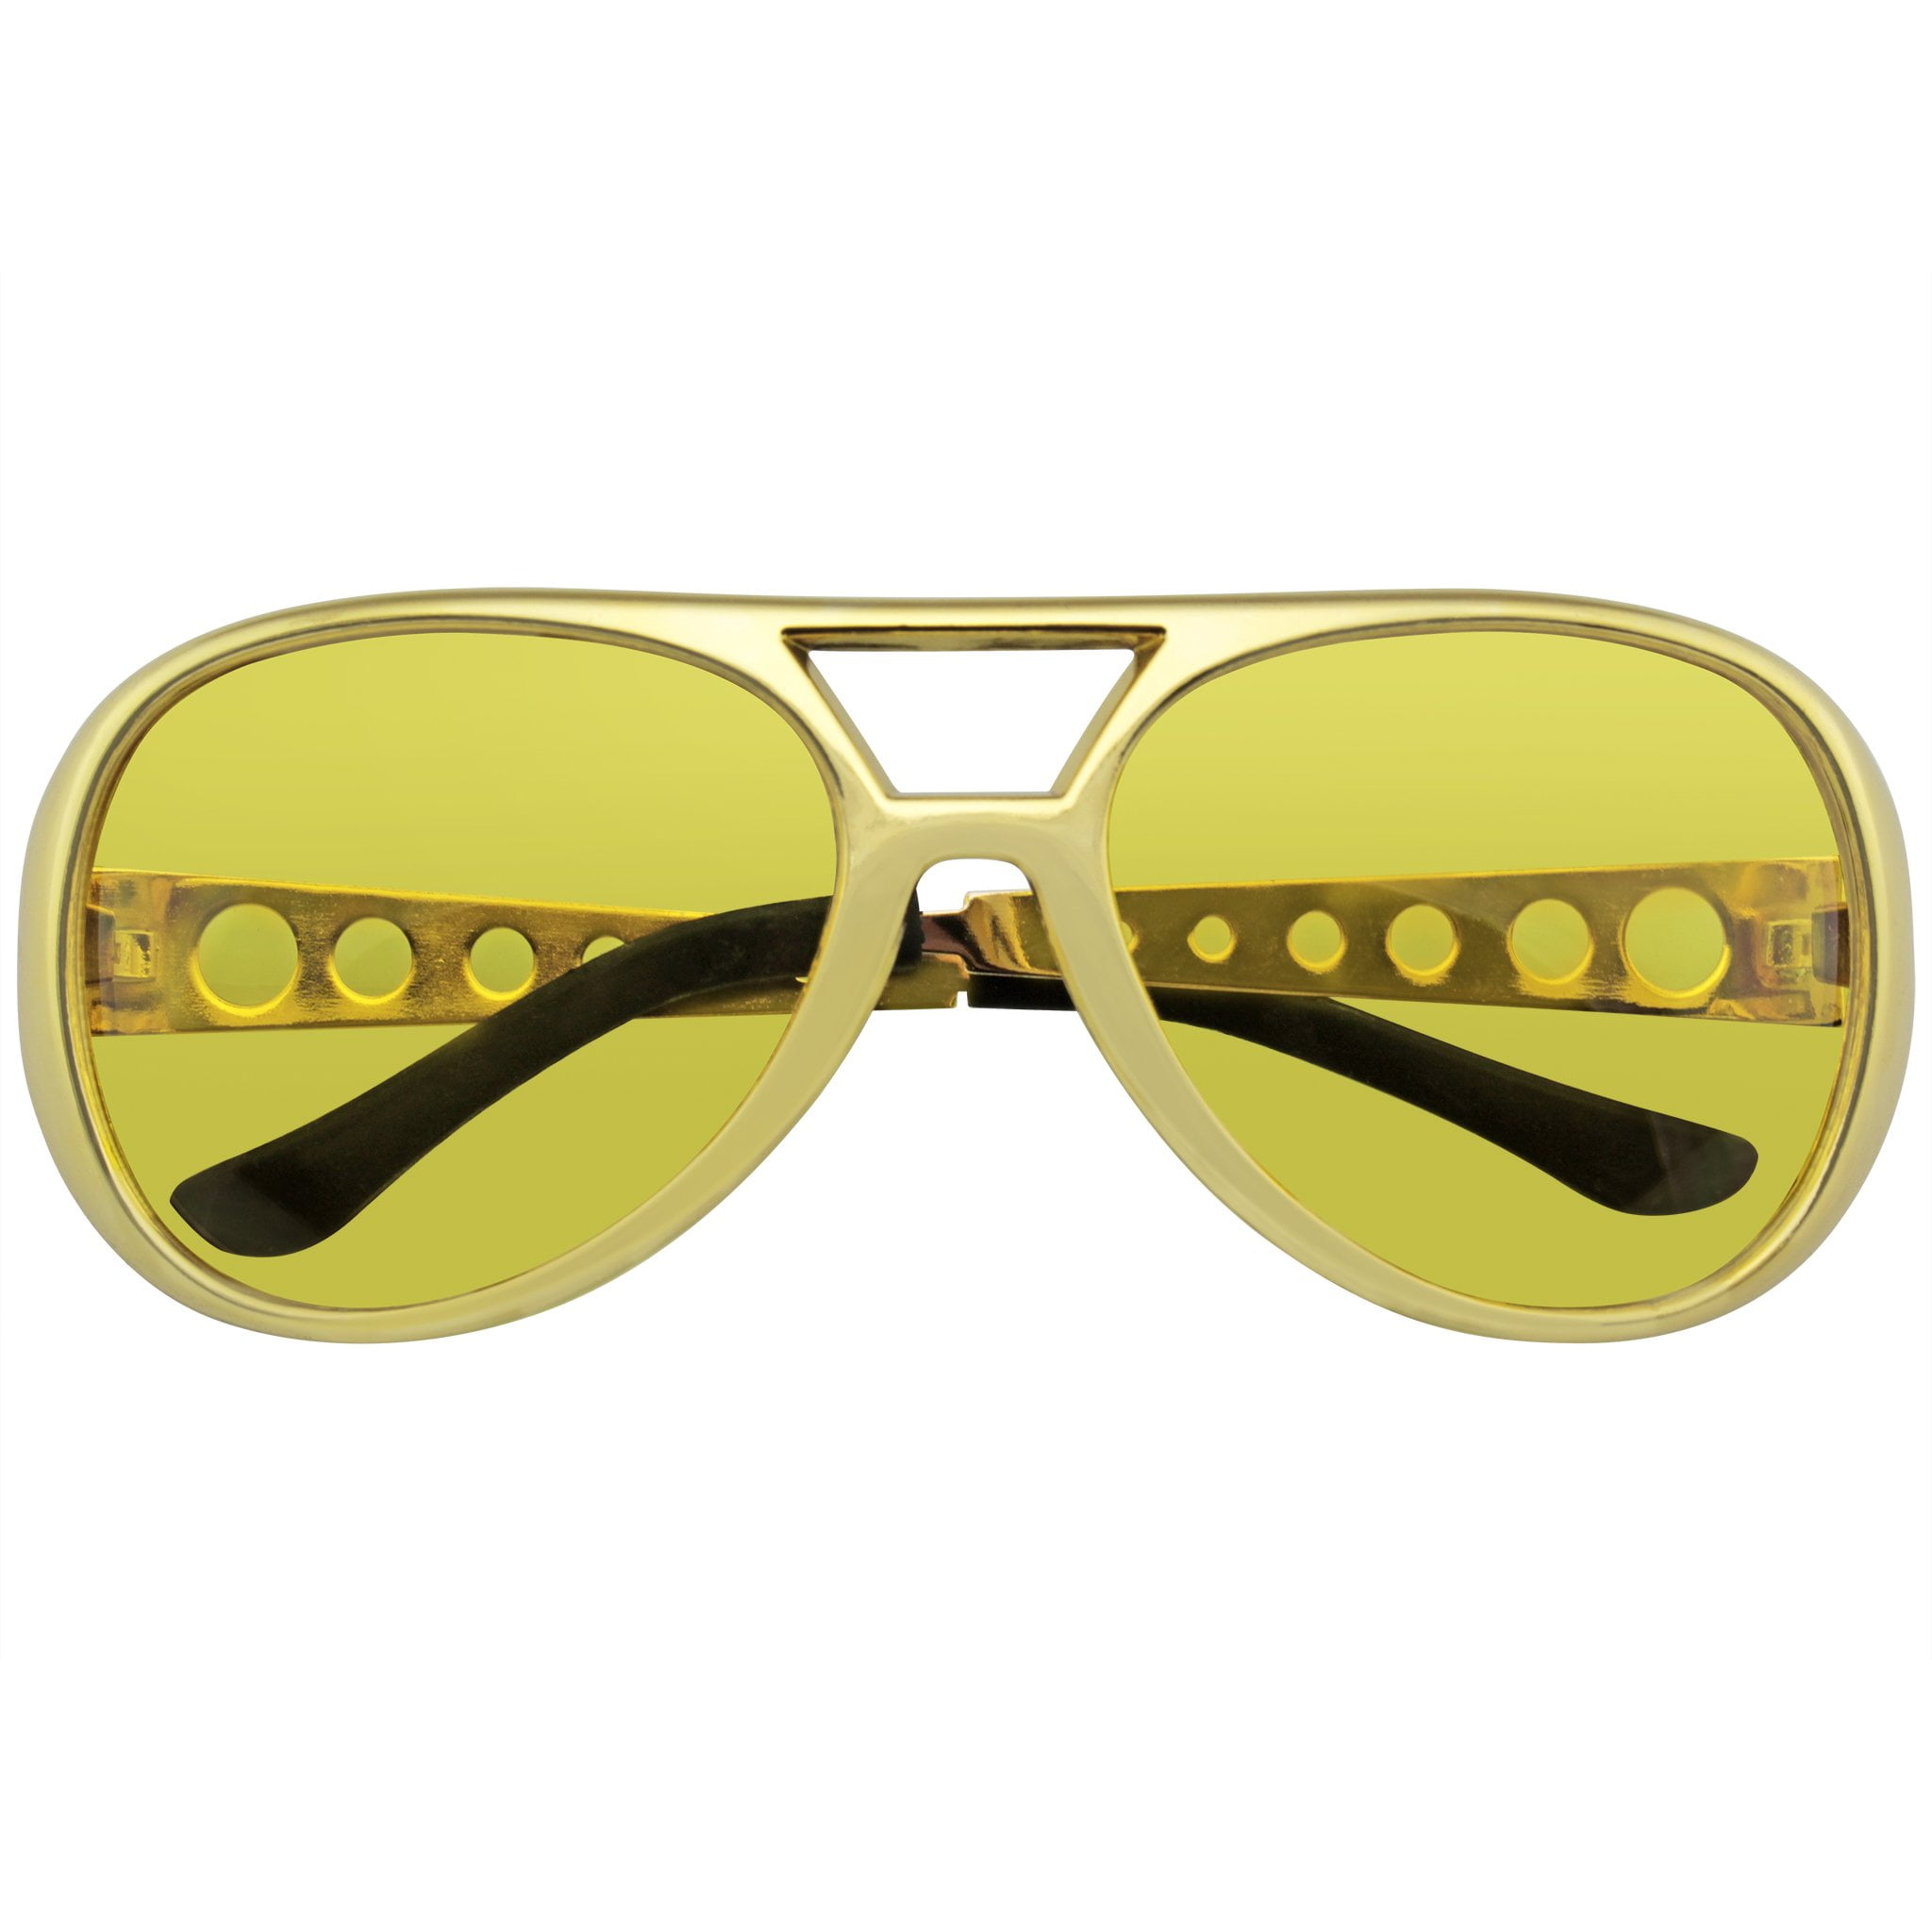 Rockstar Kids Sunglasses – I Heart Eyewear